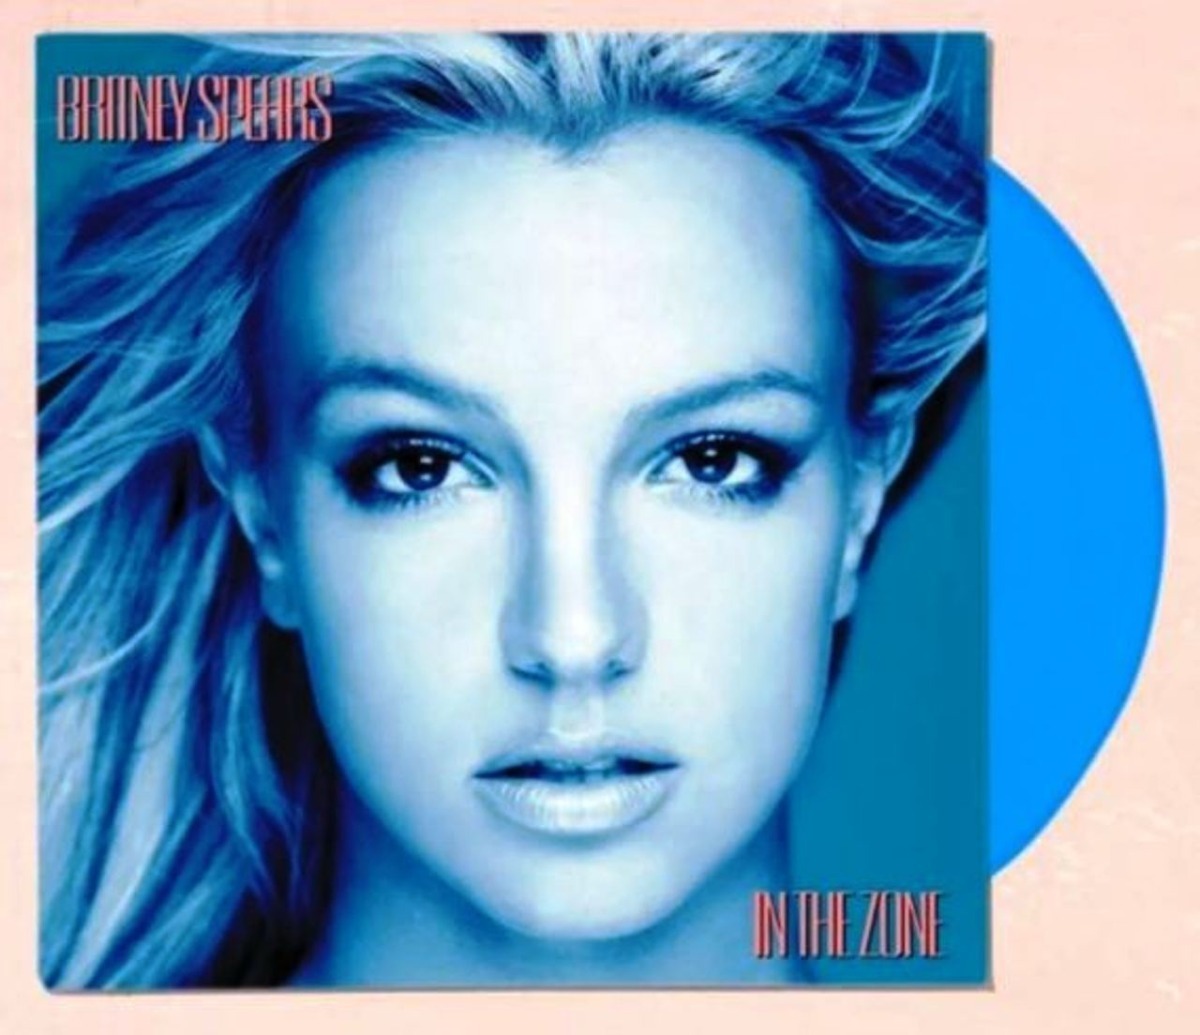 Lp Britney Spears In The Zone Lacrado E Pronta Entrega R 320 00 em 